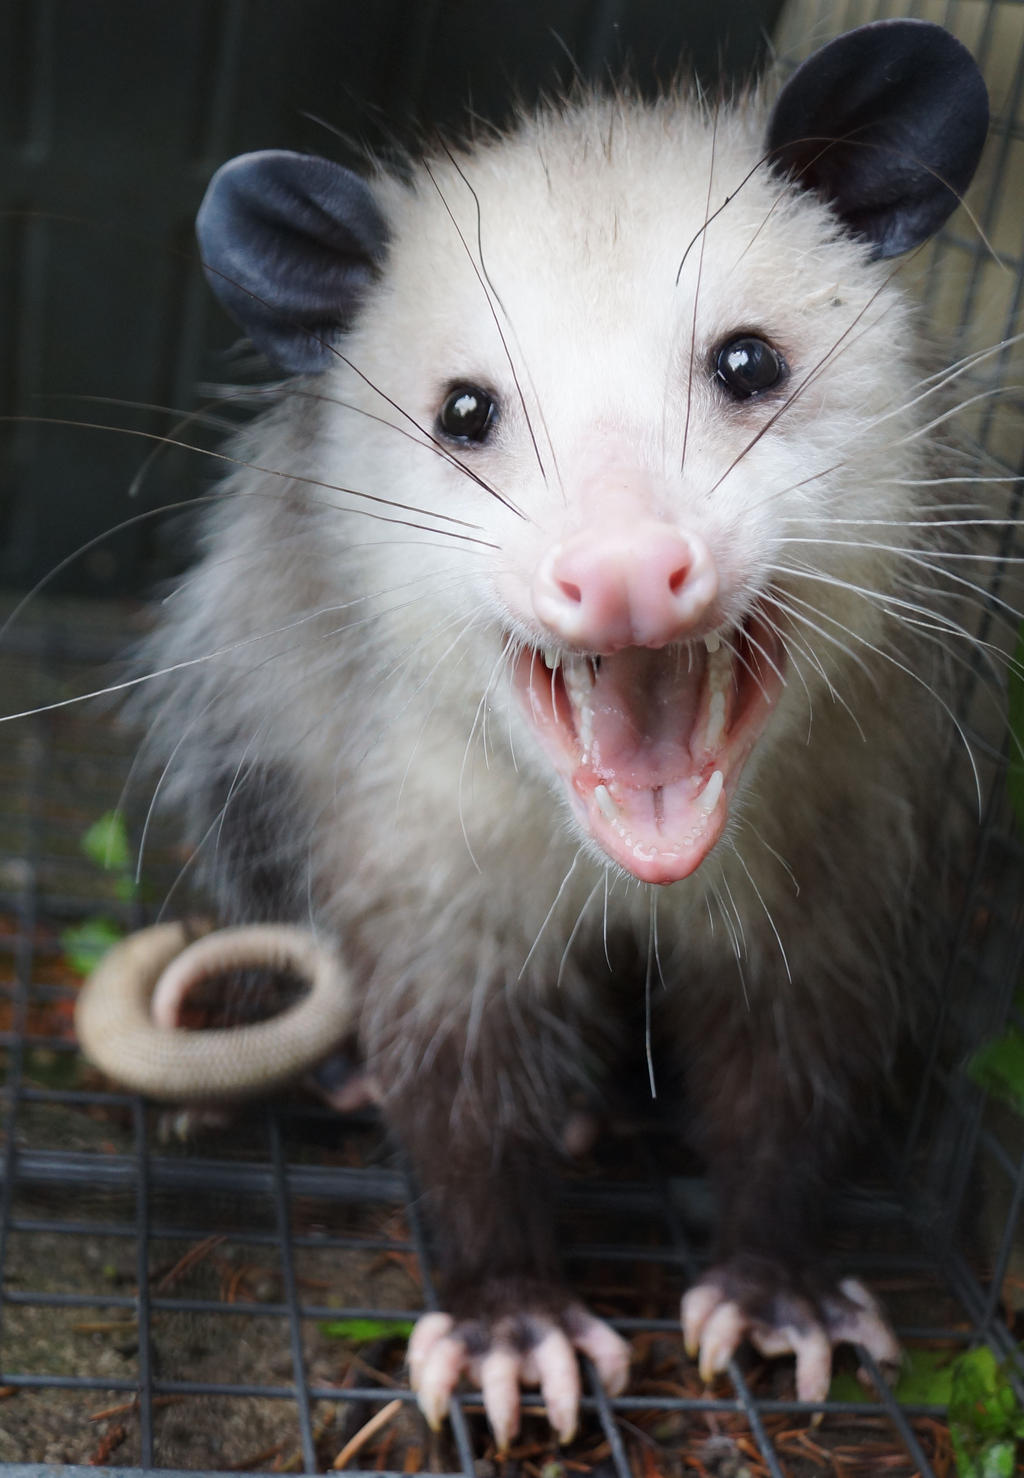 opossum_by_festung1-d6e19od.jpg